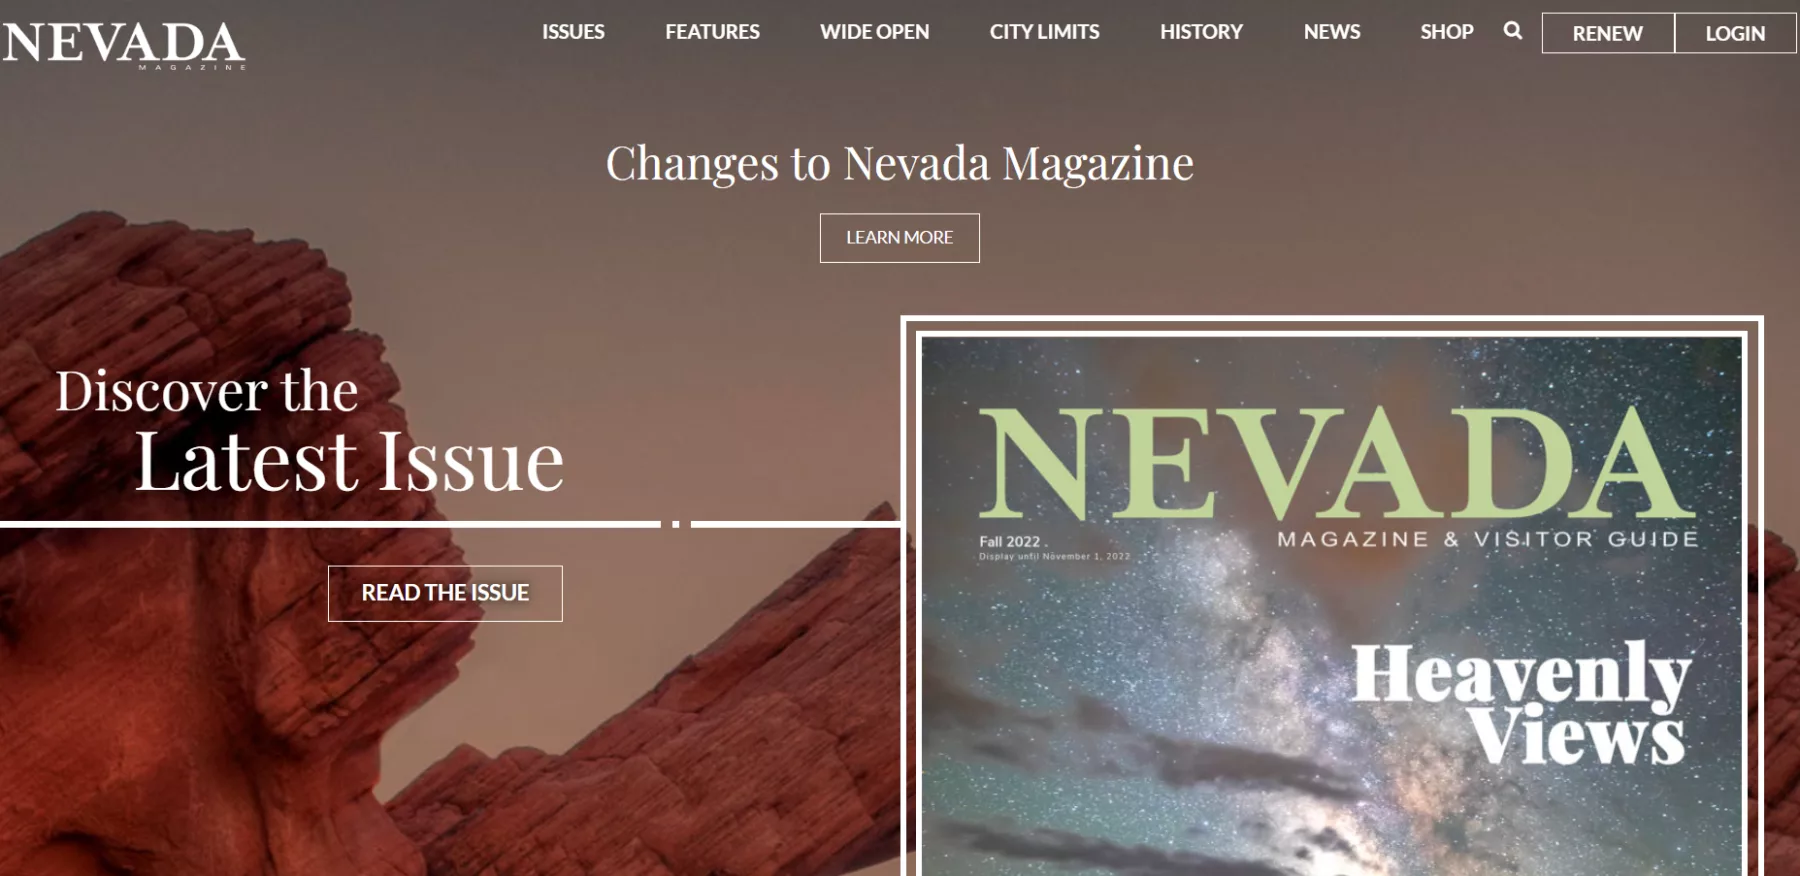 Nevada magazine